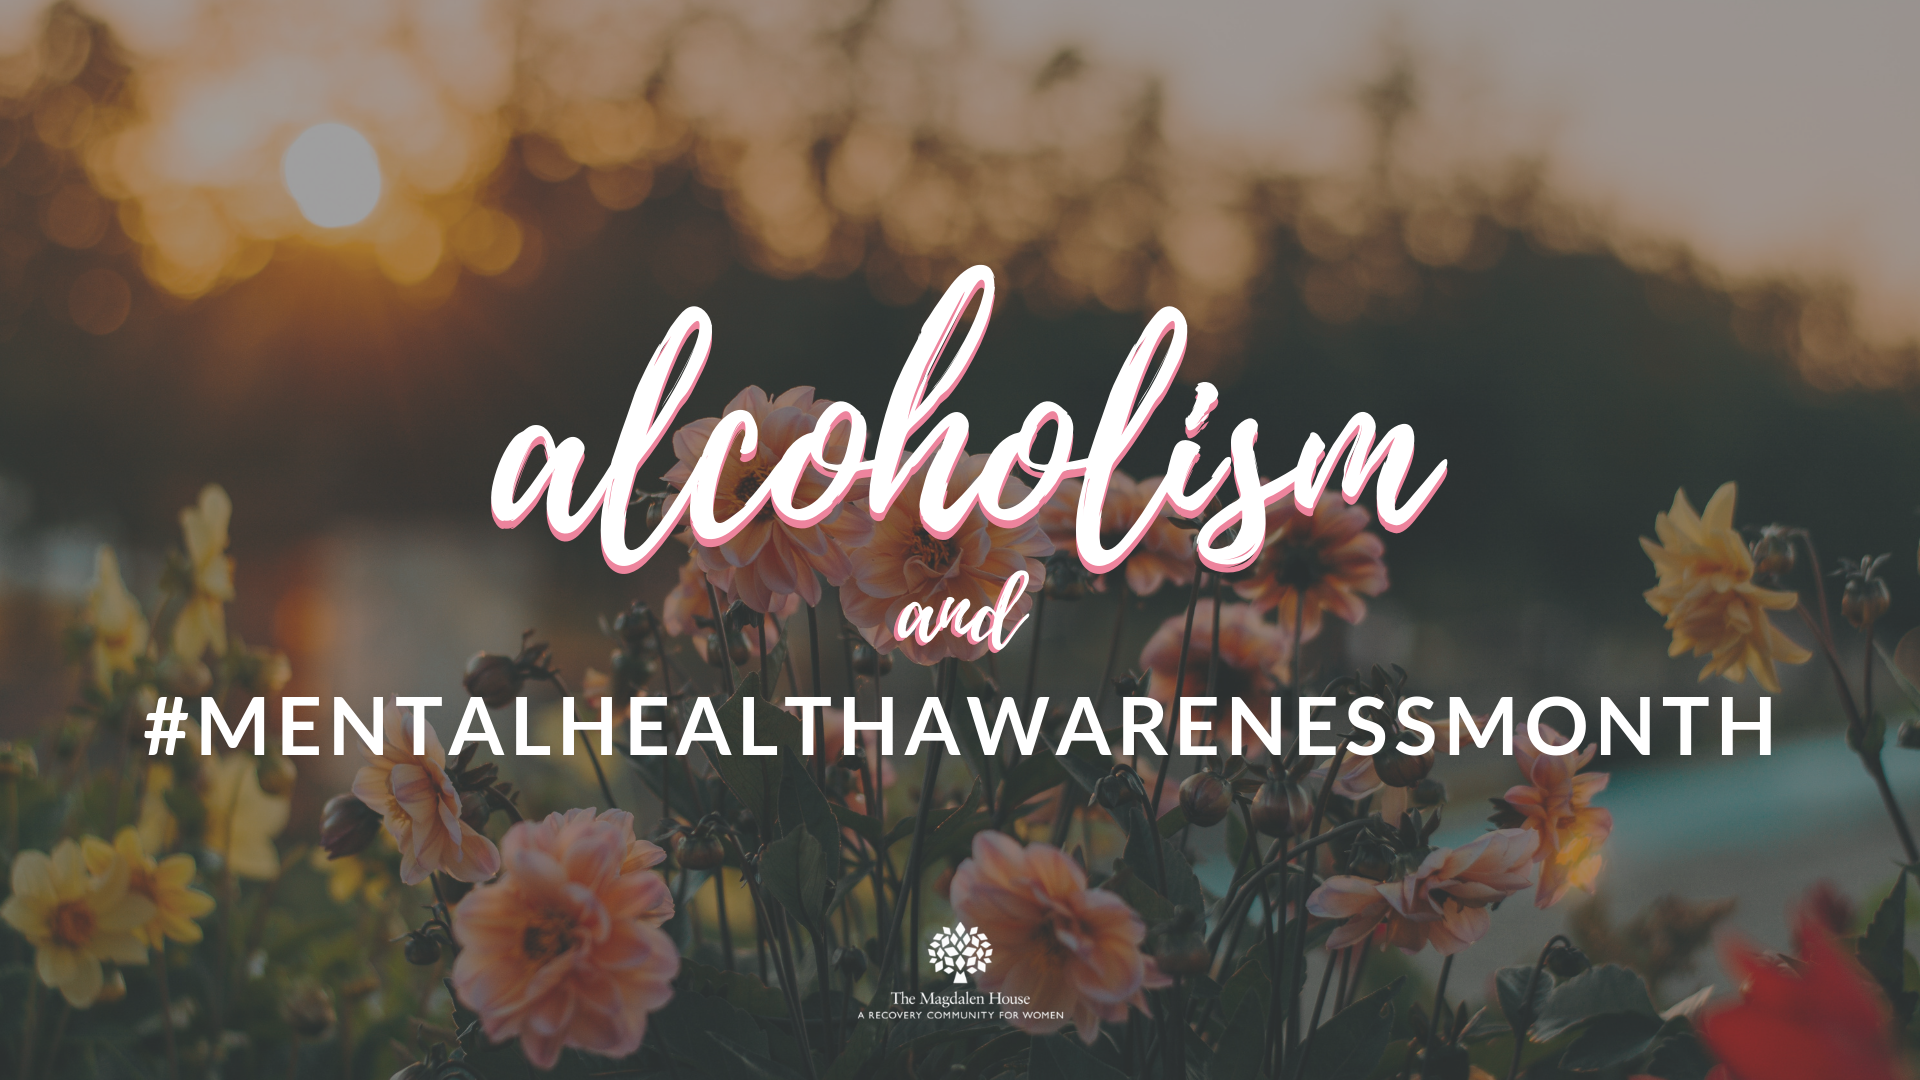 Alcoholism is a Mental Illness